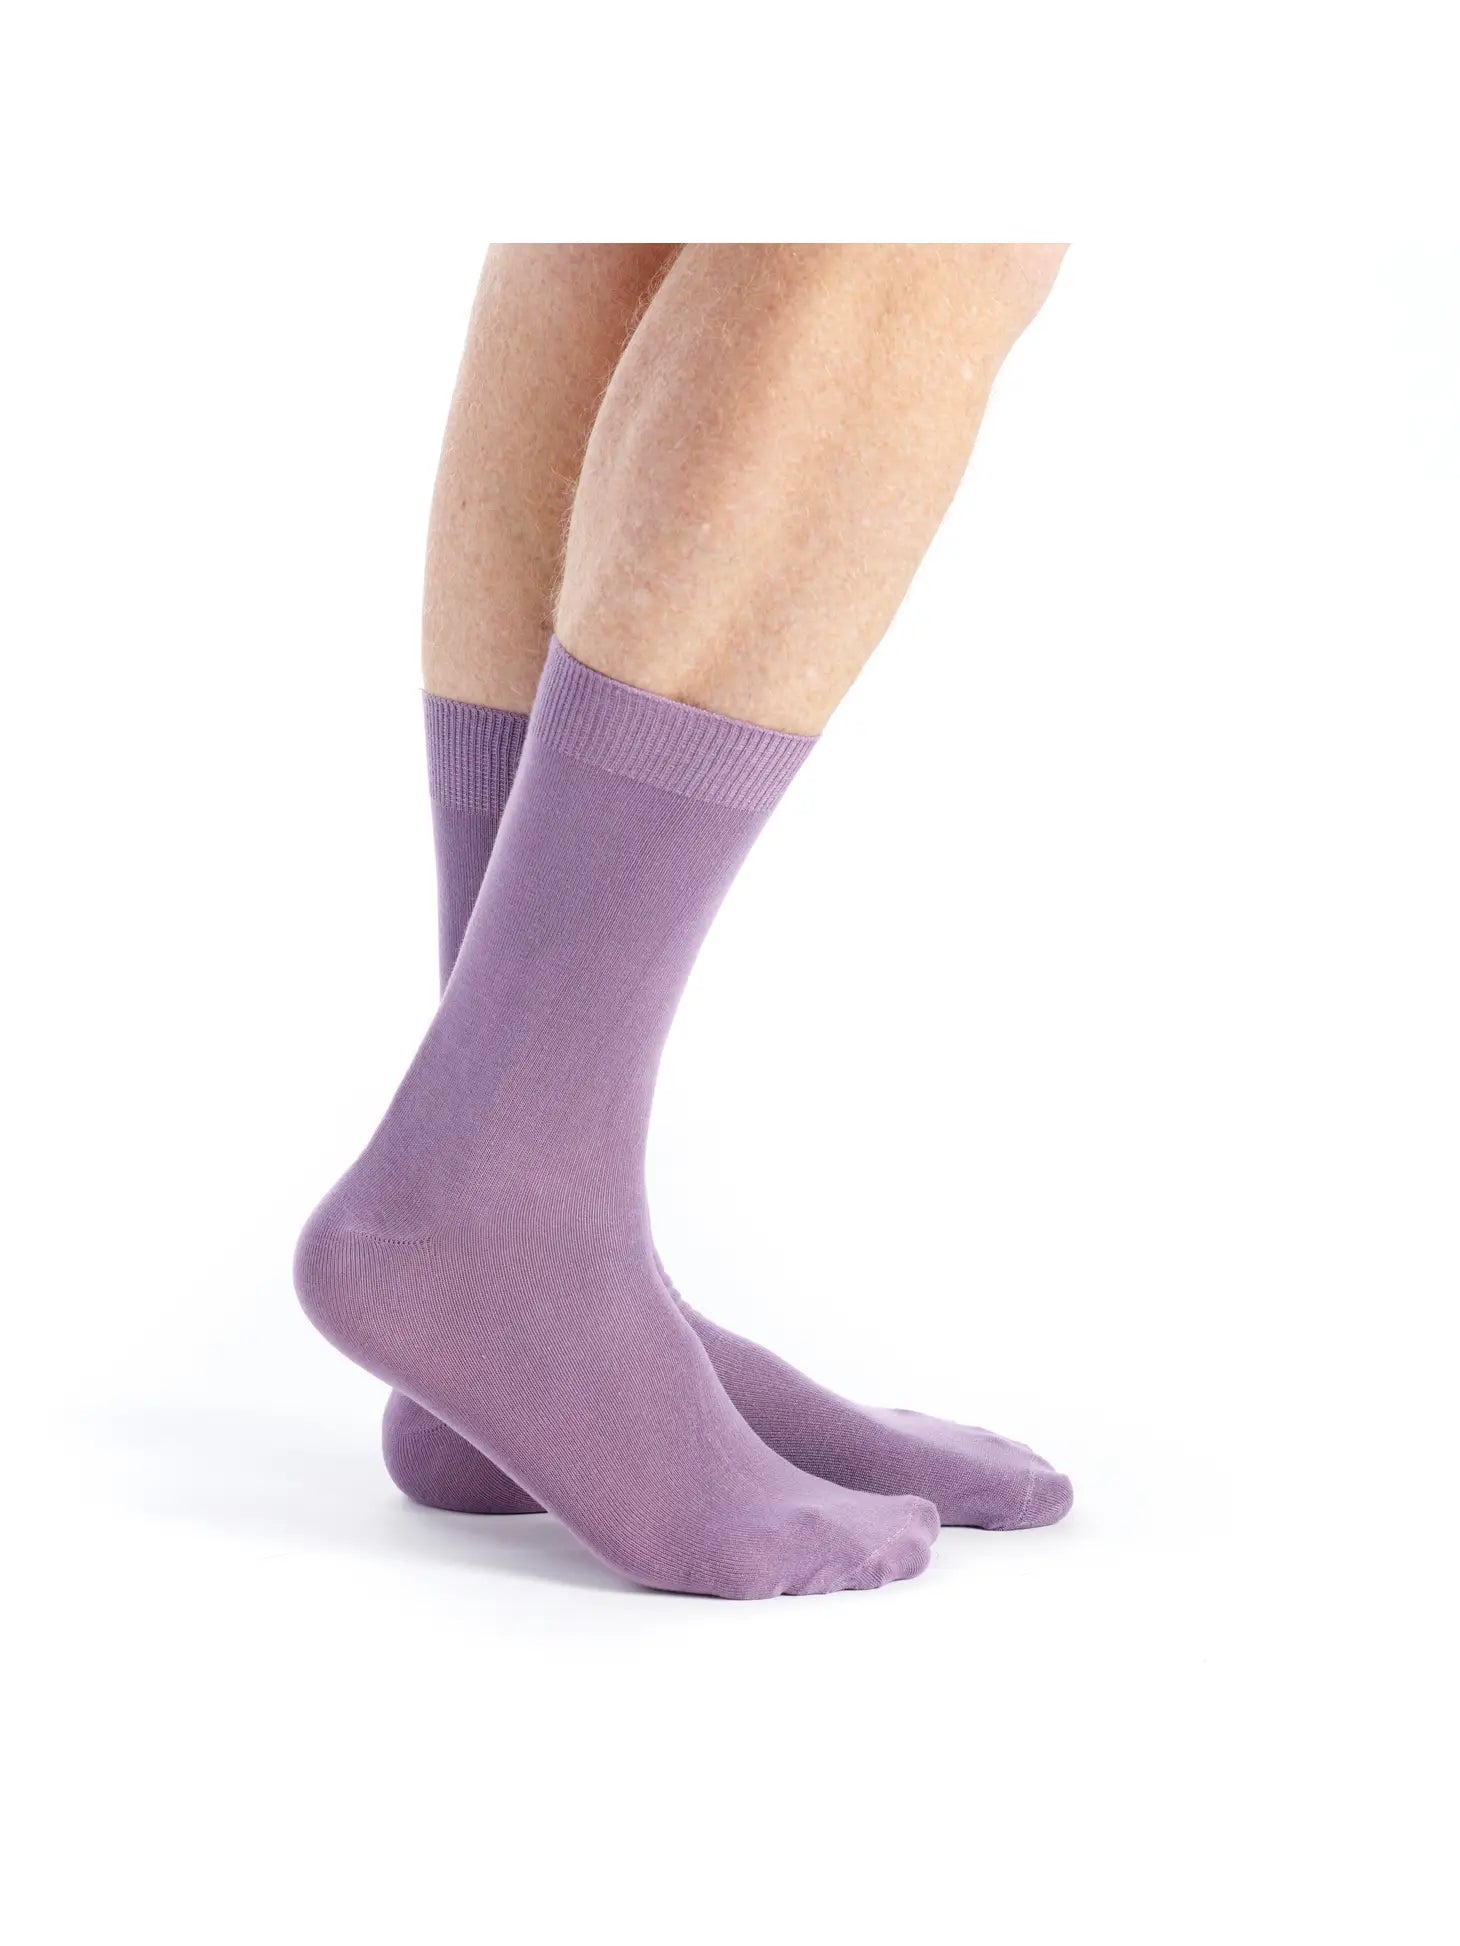 Silk Touch Bamboo Socks in Purple - The Sockery